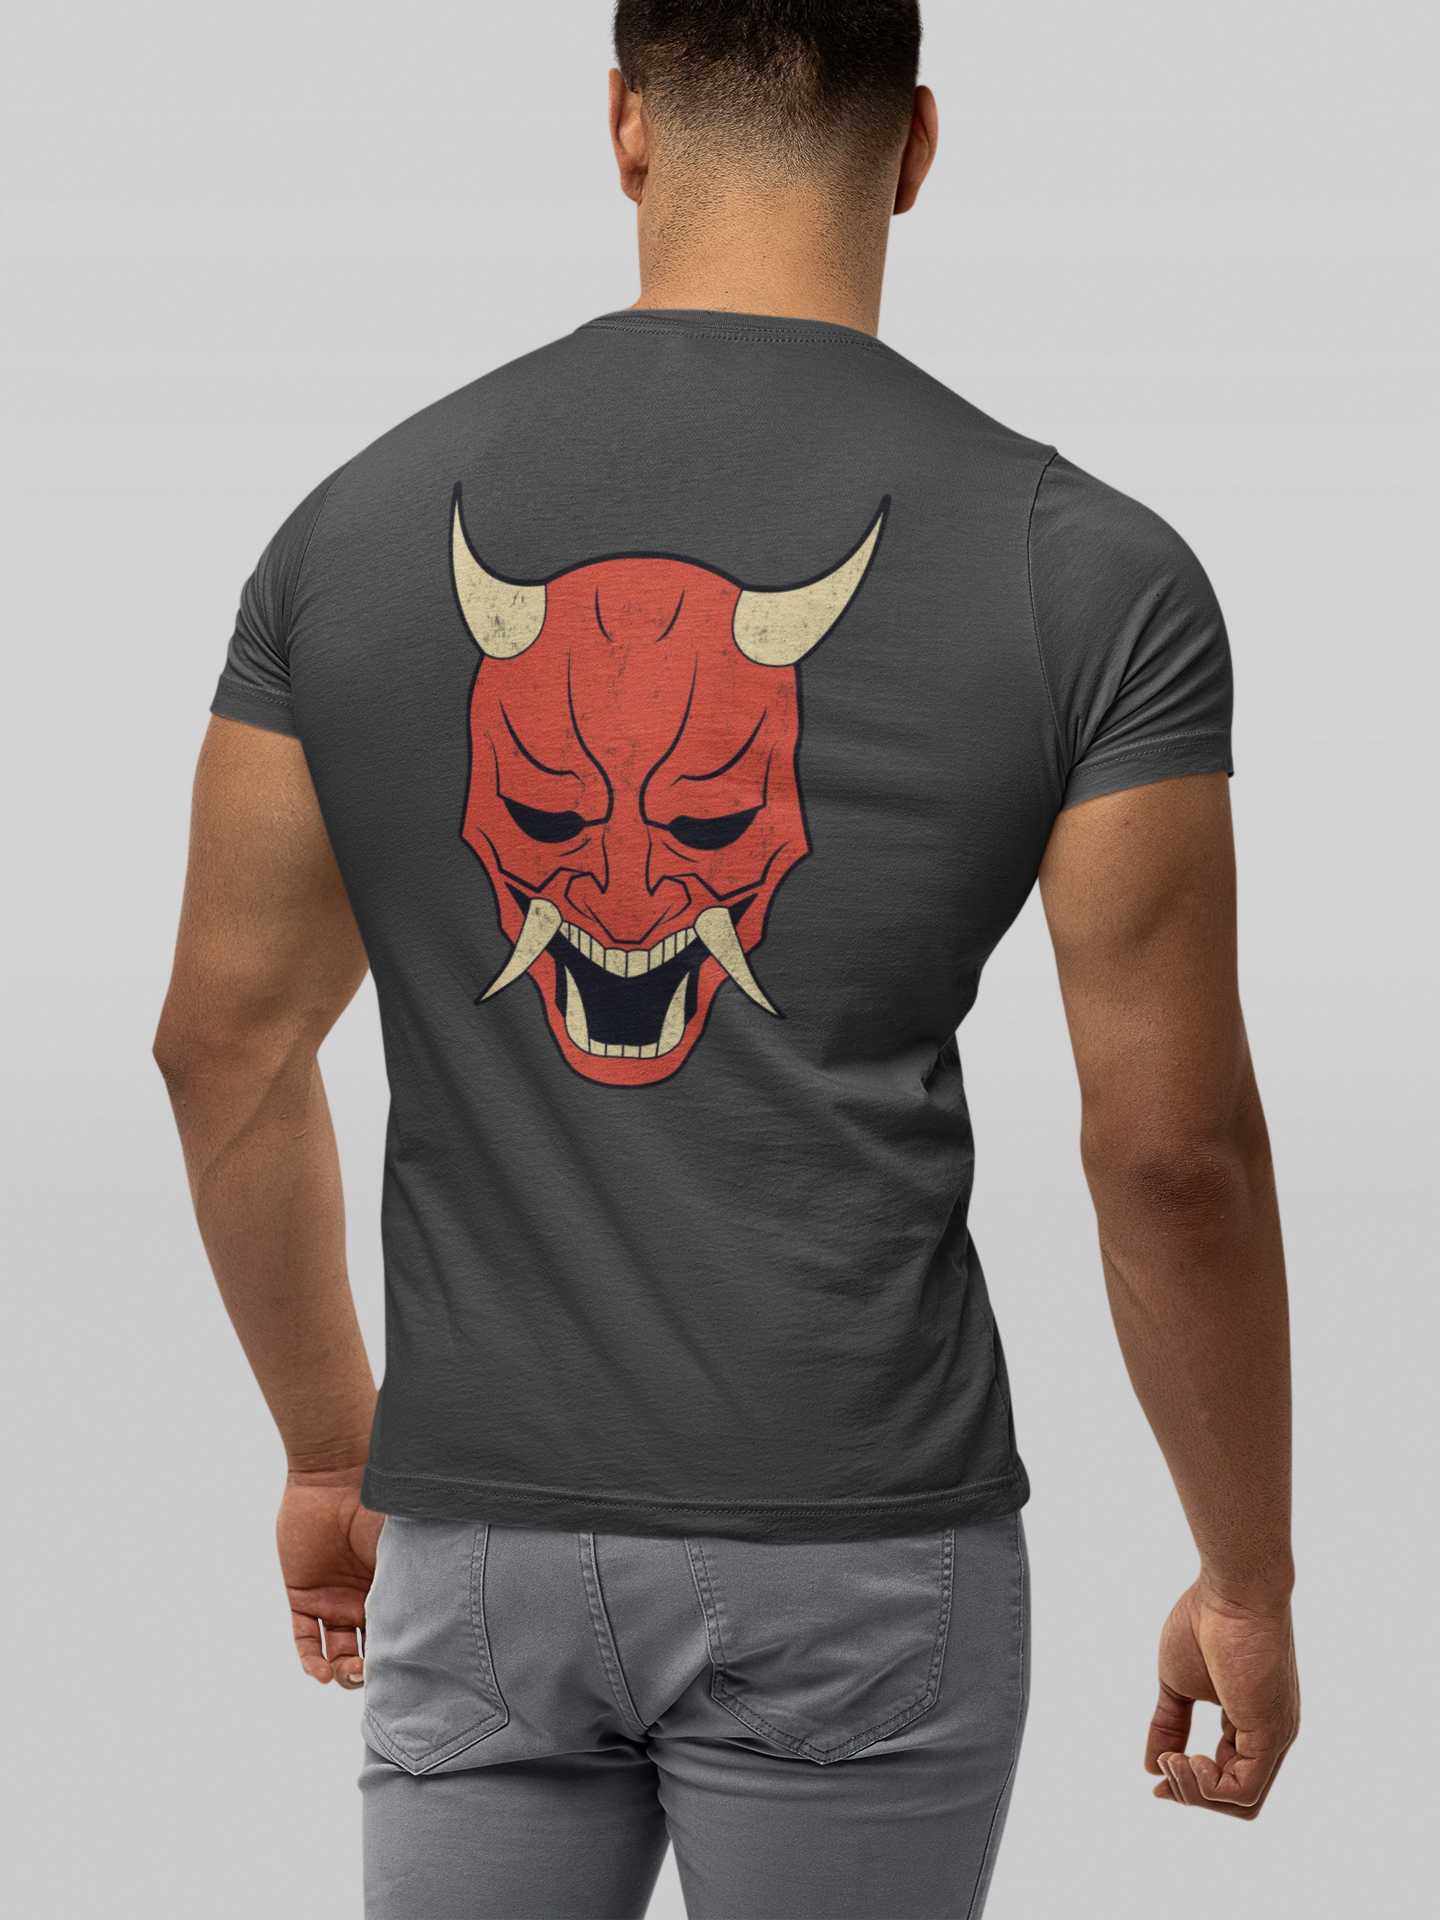 The Devil - Gym T-Shirt Strong Soul Shirts & Tops